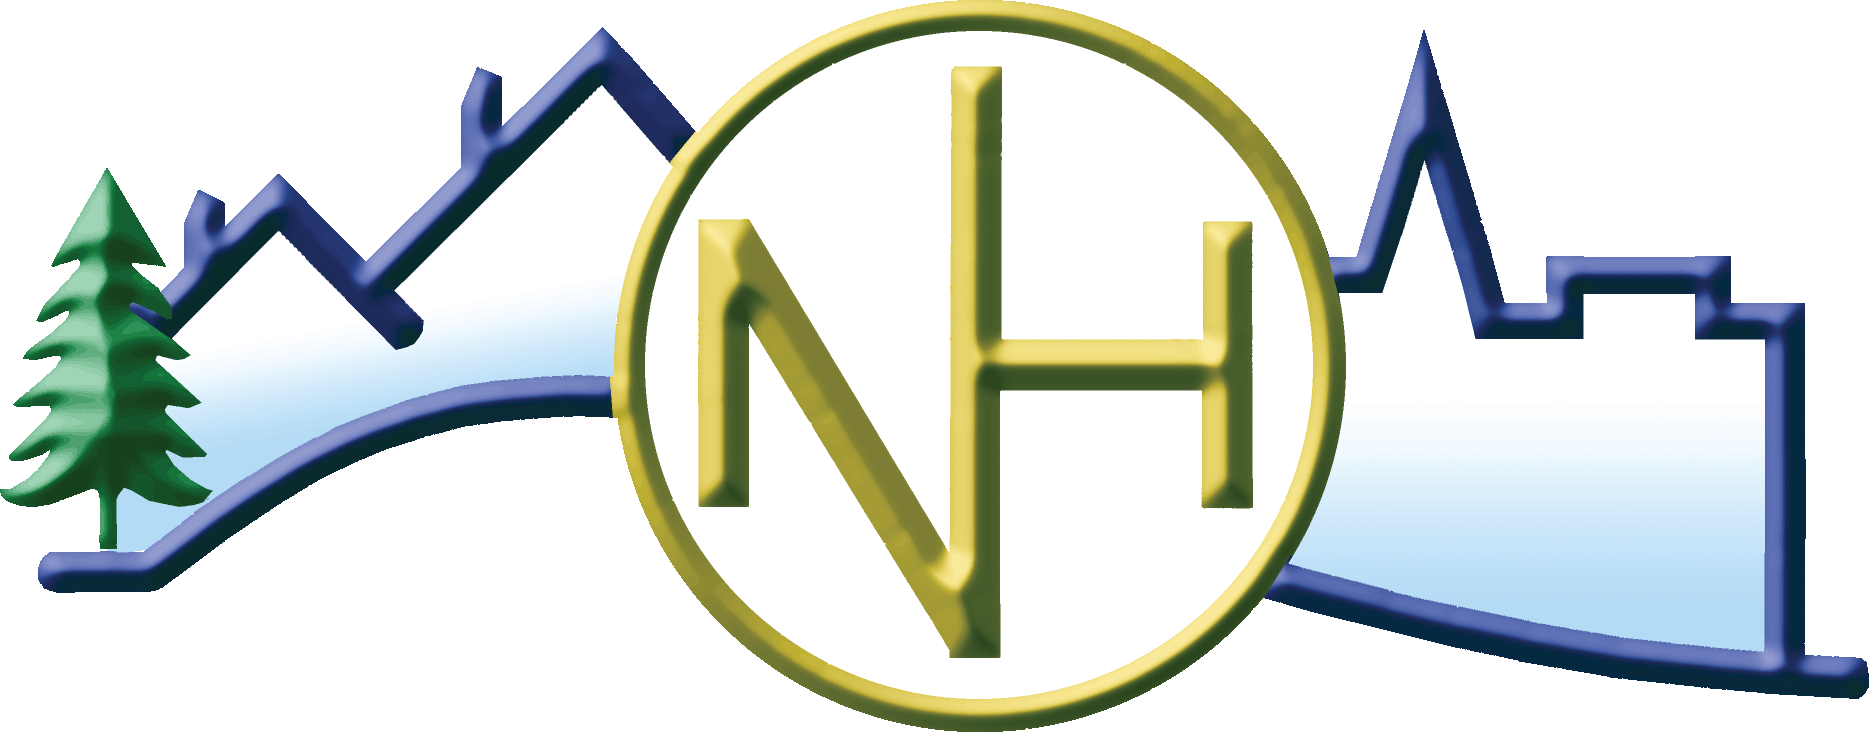 New Hope Logo - Home - City of New Hope